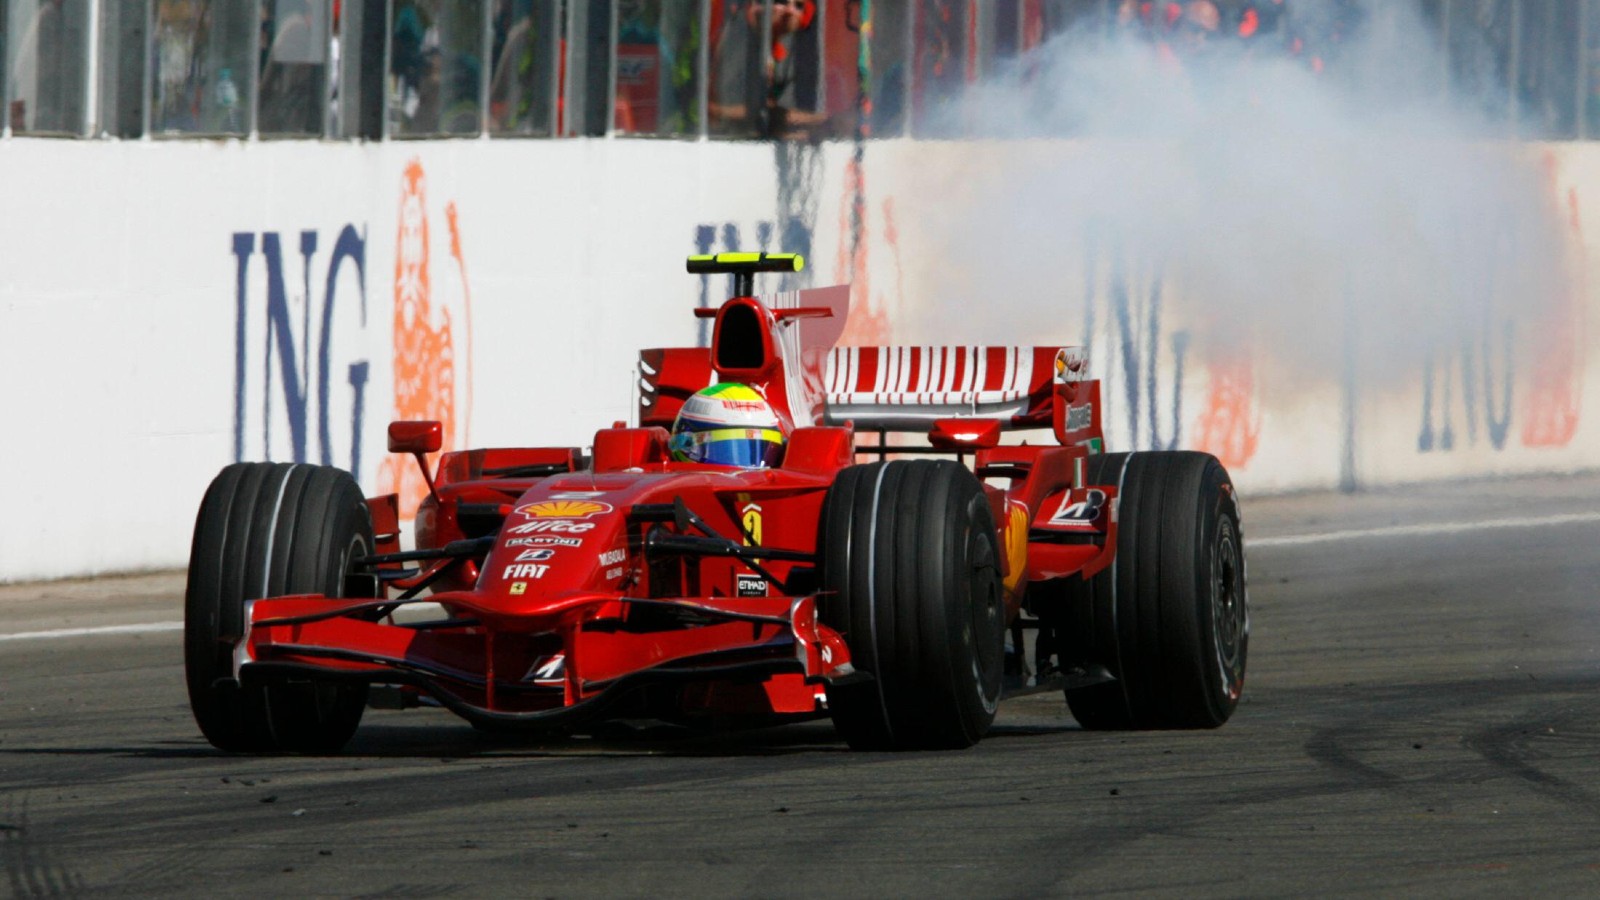 Ferrari's Felipe Massa breaks down at the 2008 Hungarian Grand Prix. Budapest, August 2008.